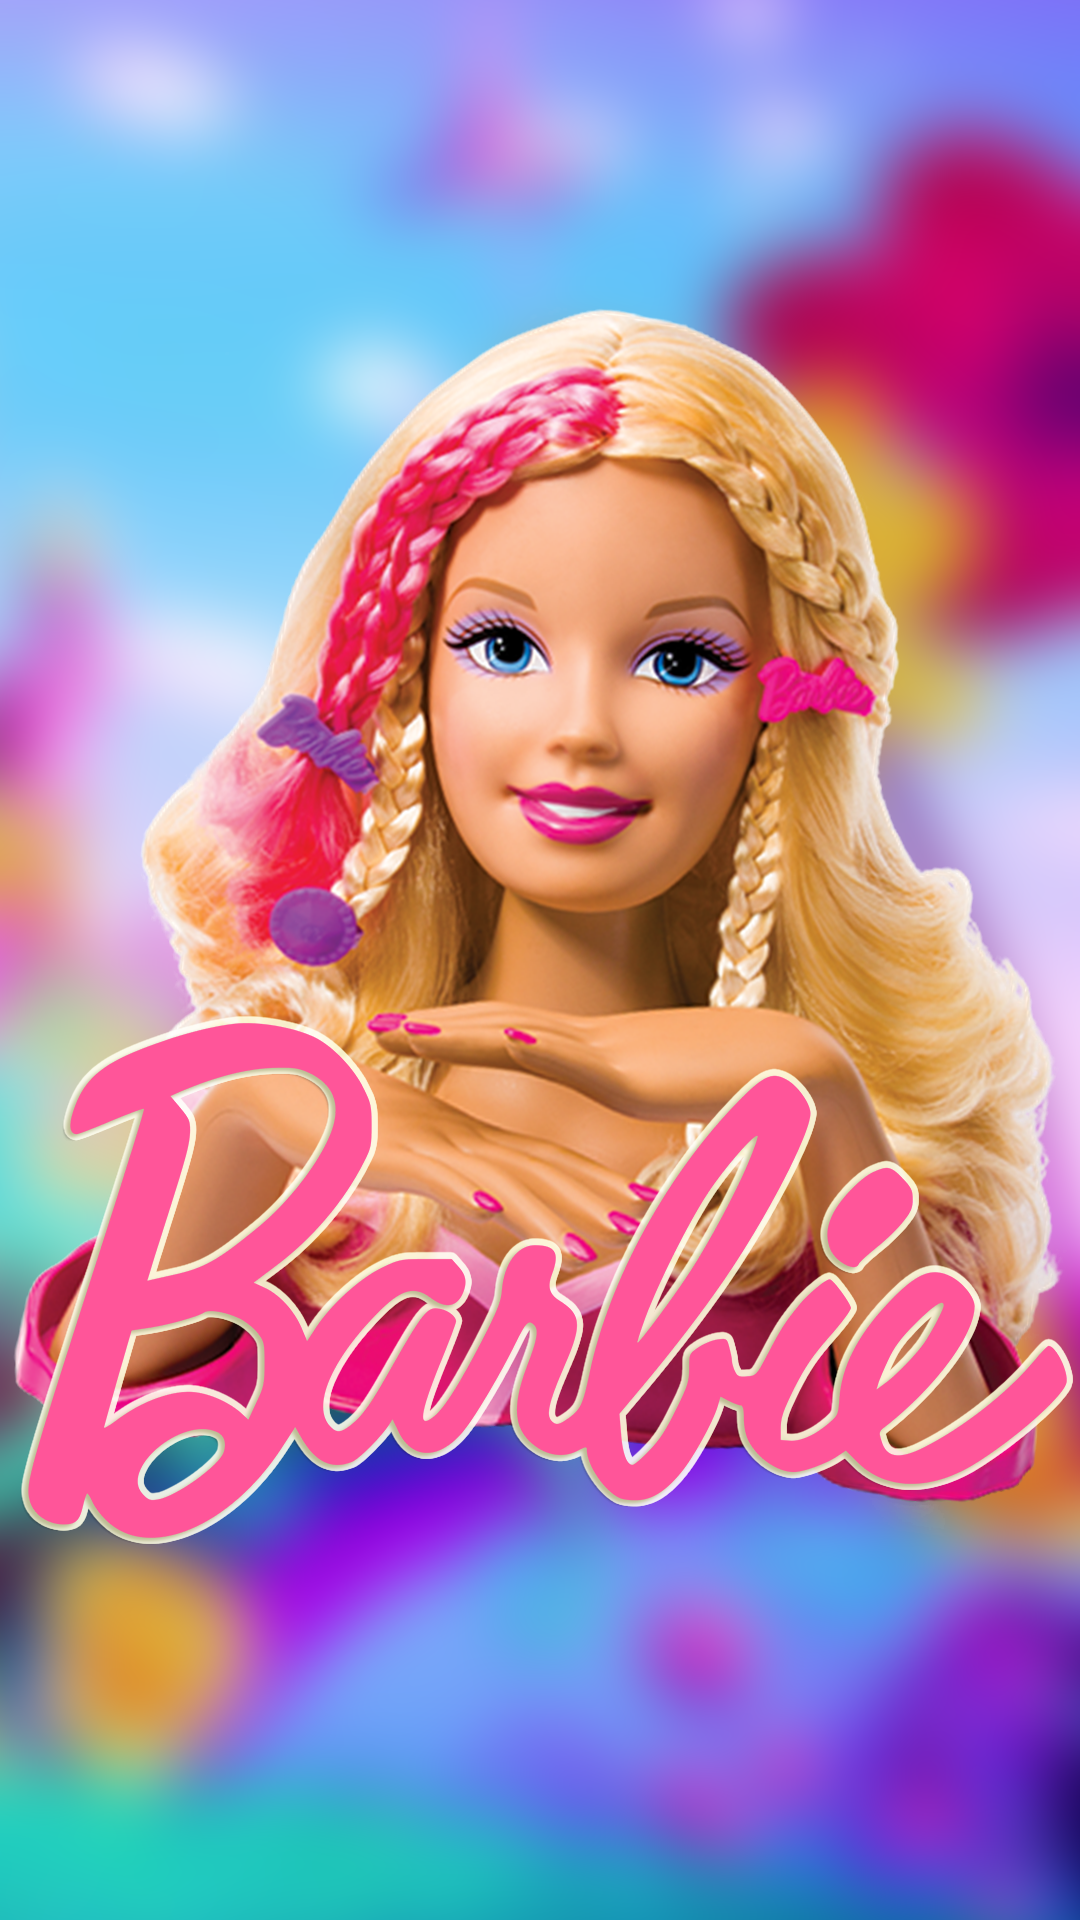 Barbie Wallpaper for Phone